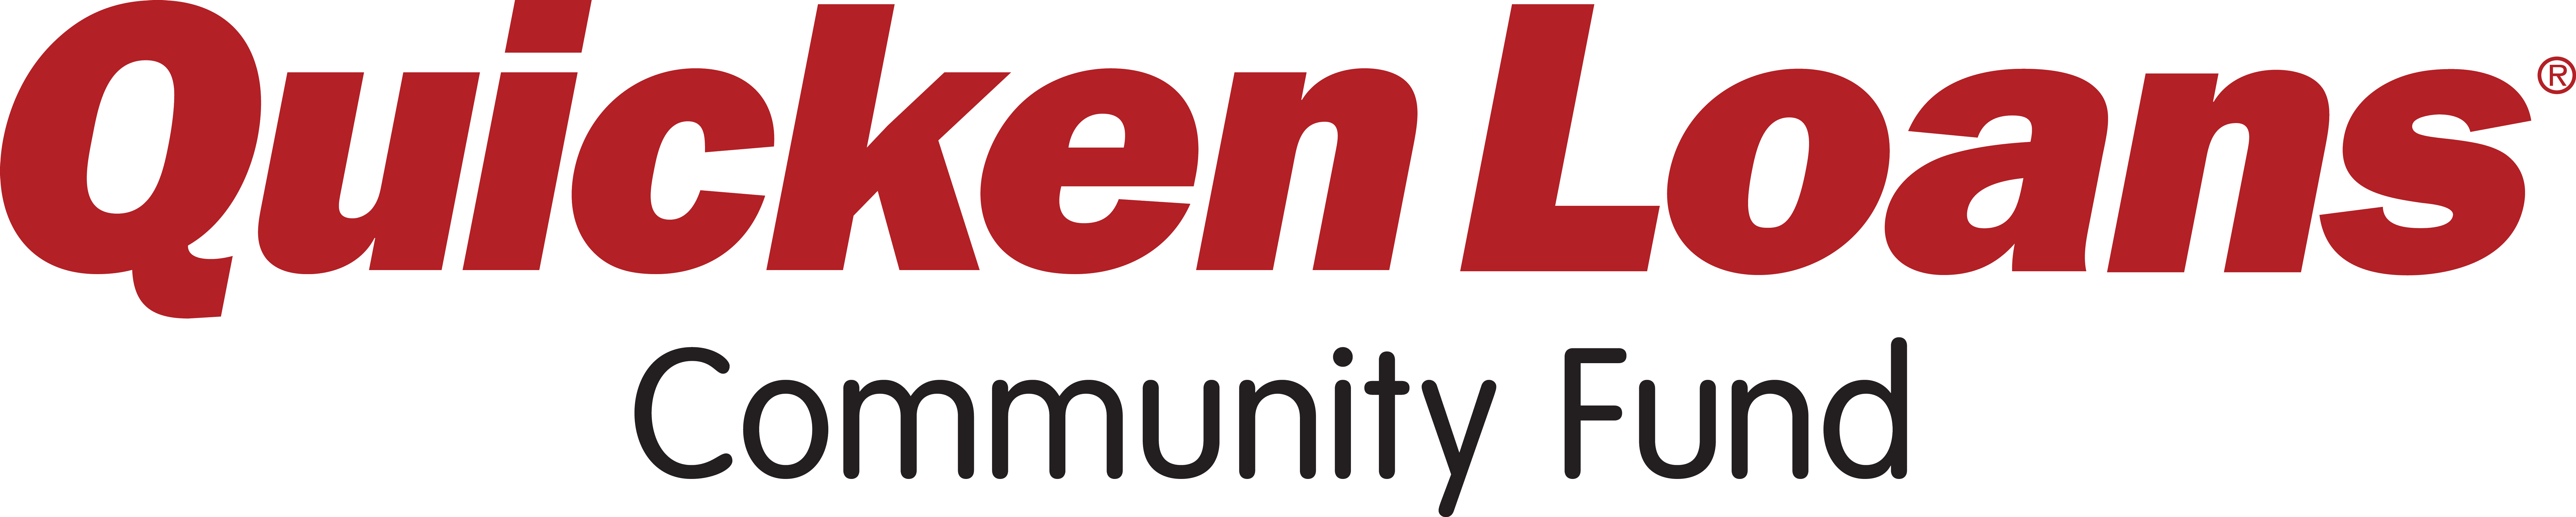 Quicken Logo - Quicken Loans - Branding & Logos | Quicken Loans Pressroom